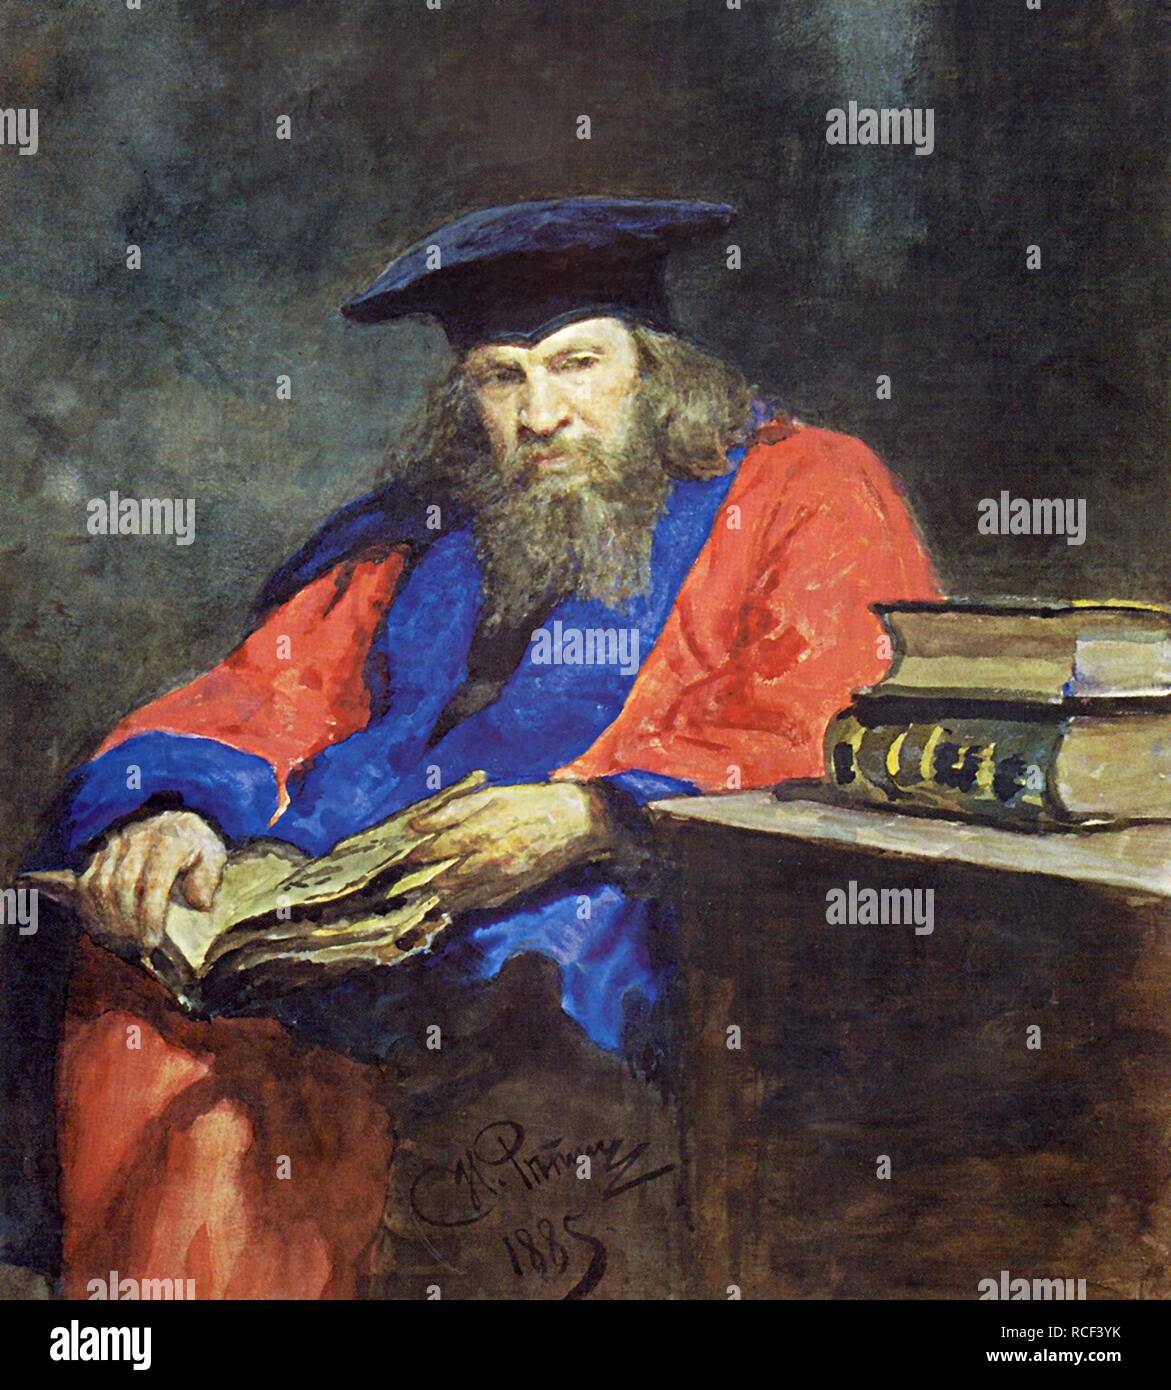 Portrait of Dmitri Mendeleev in the dress of the University of Edinburgh. Museum: State Tretyakov Gallery, Moscow. Author: REPIN, ILYA YEFIMOVICH. Stock Photo